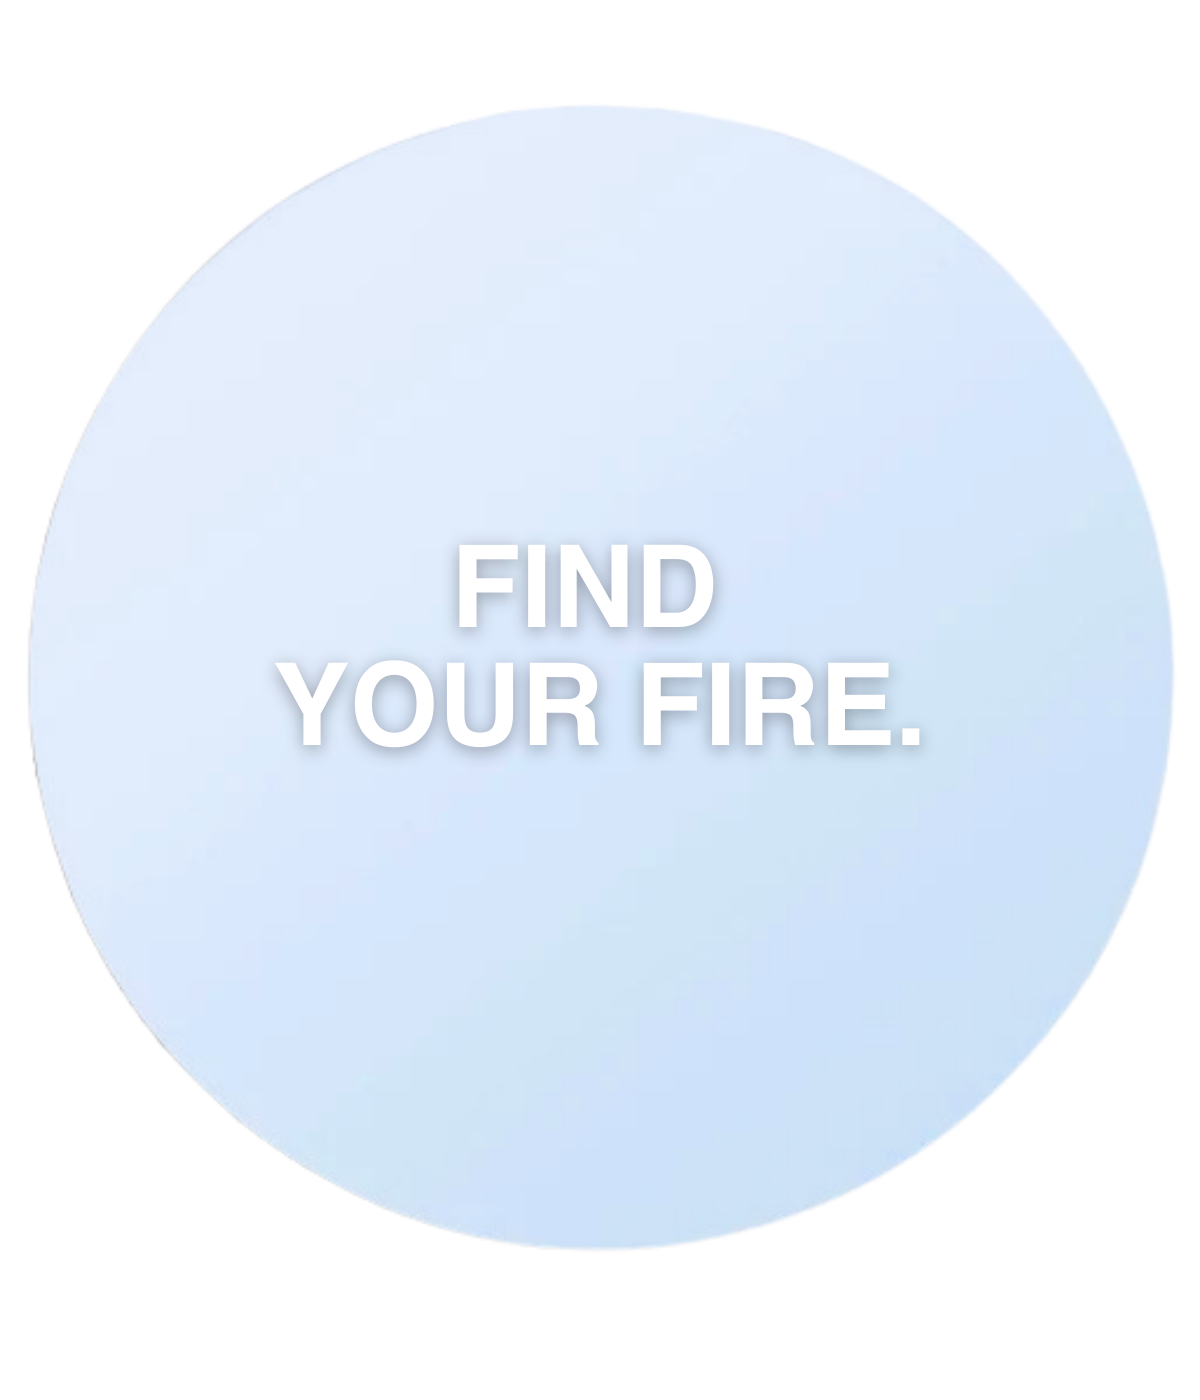 Find Your Fire Motivational Sticker